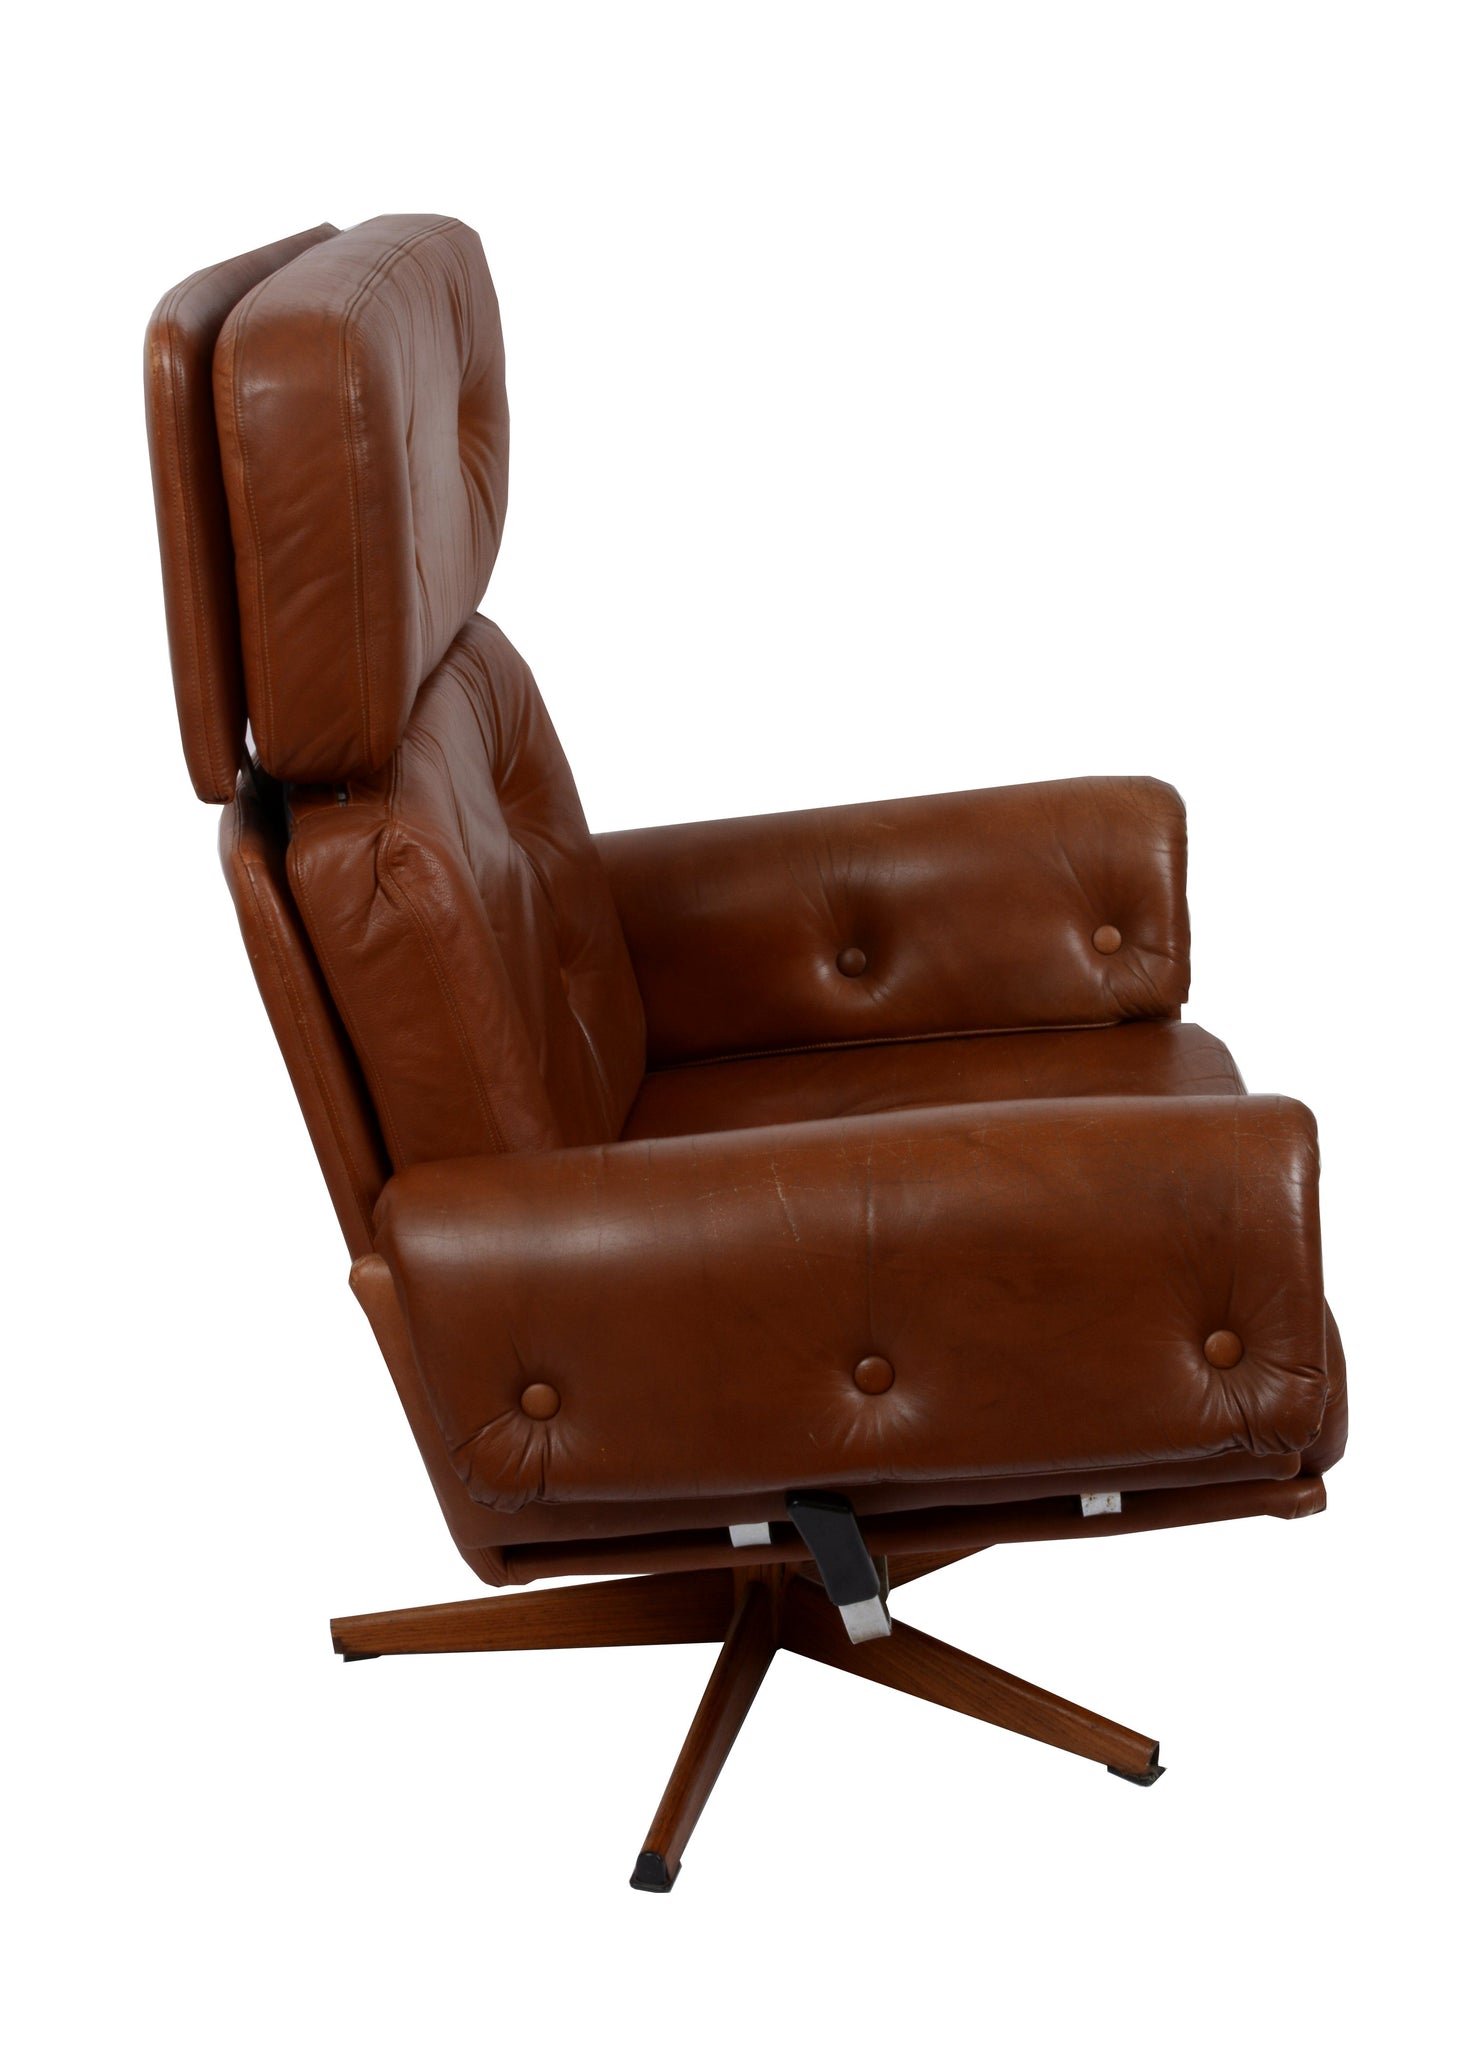 Slätte-Gungan - Swedfurn - Mid Century Lounge Chair